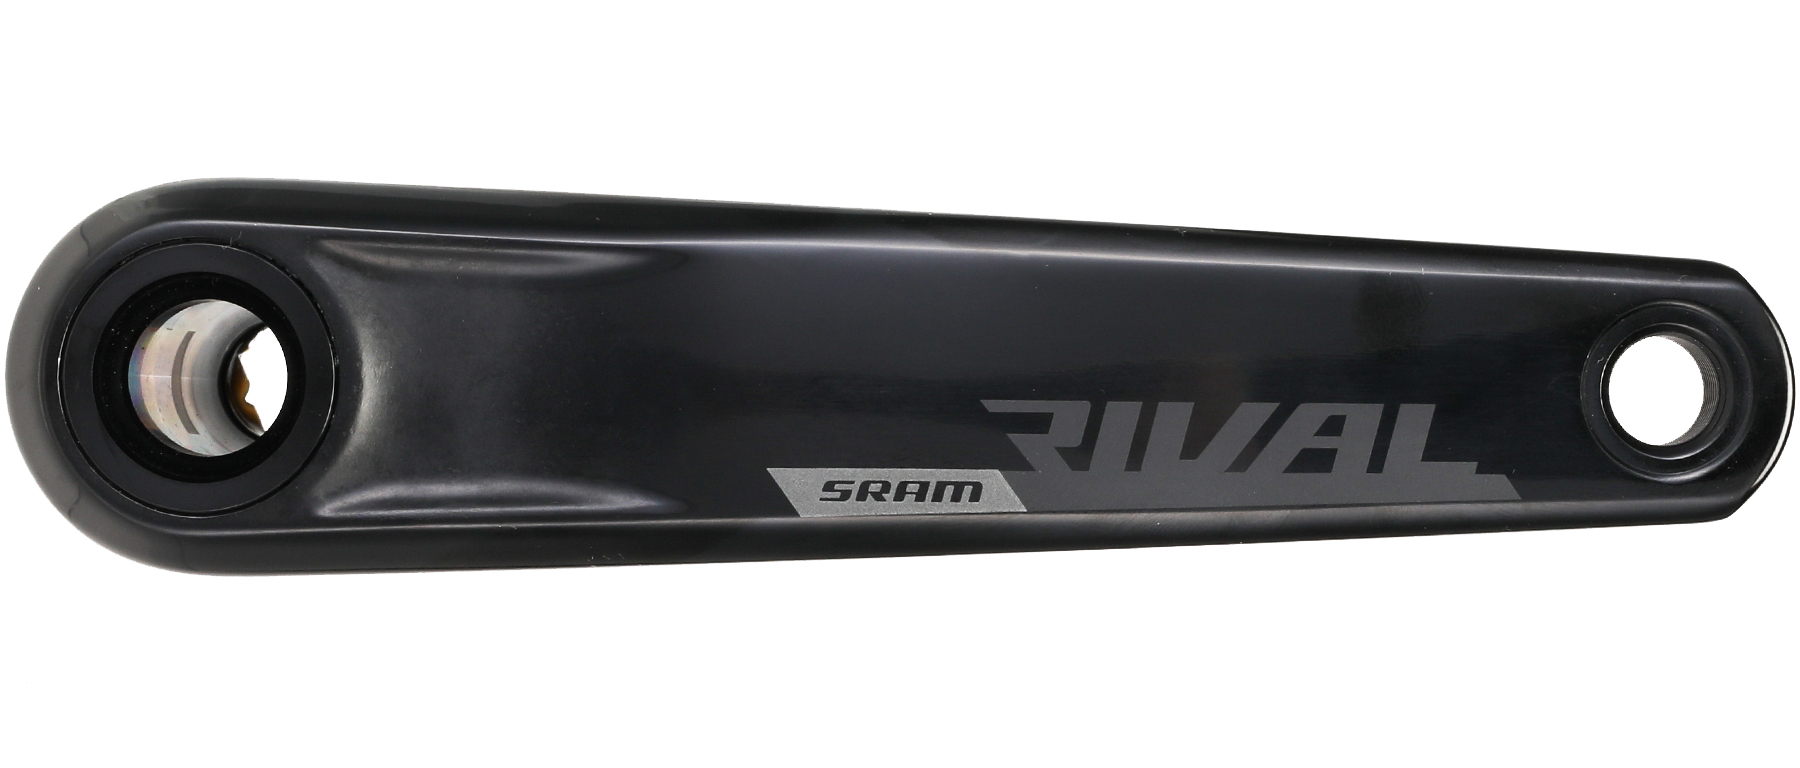 SRAM Rival 1 Wide 12-Speed Crankset